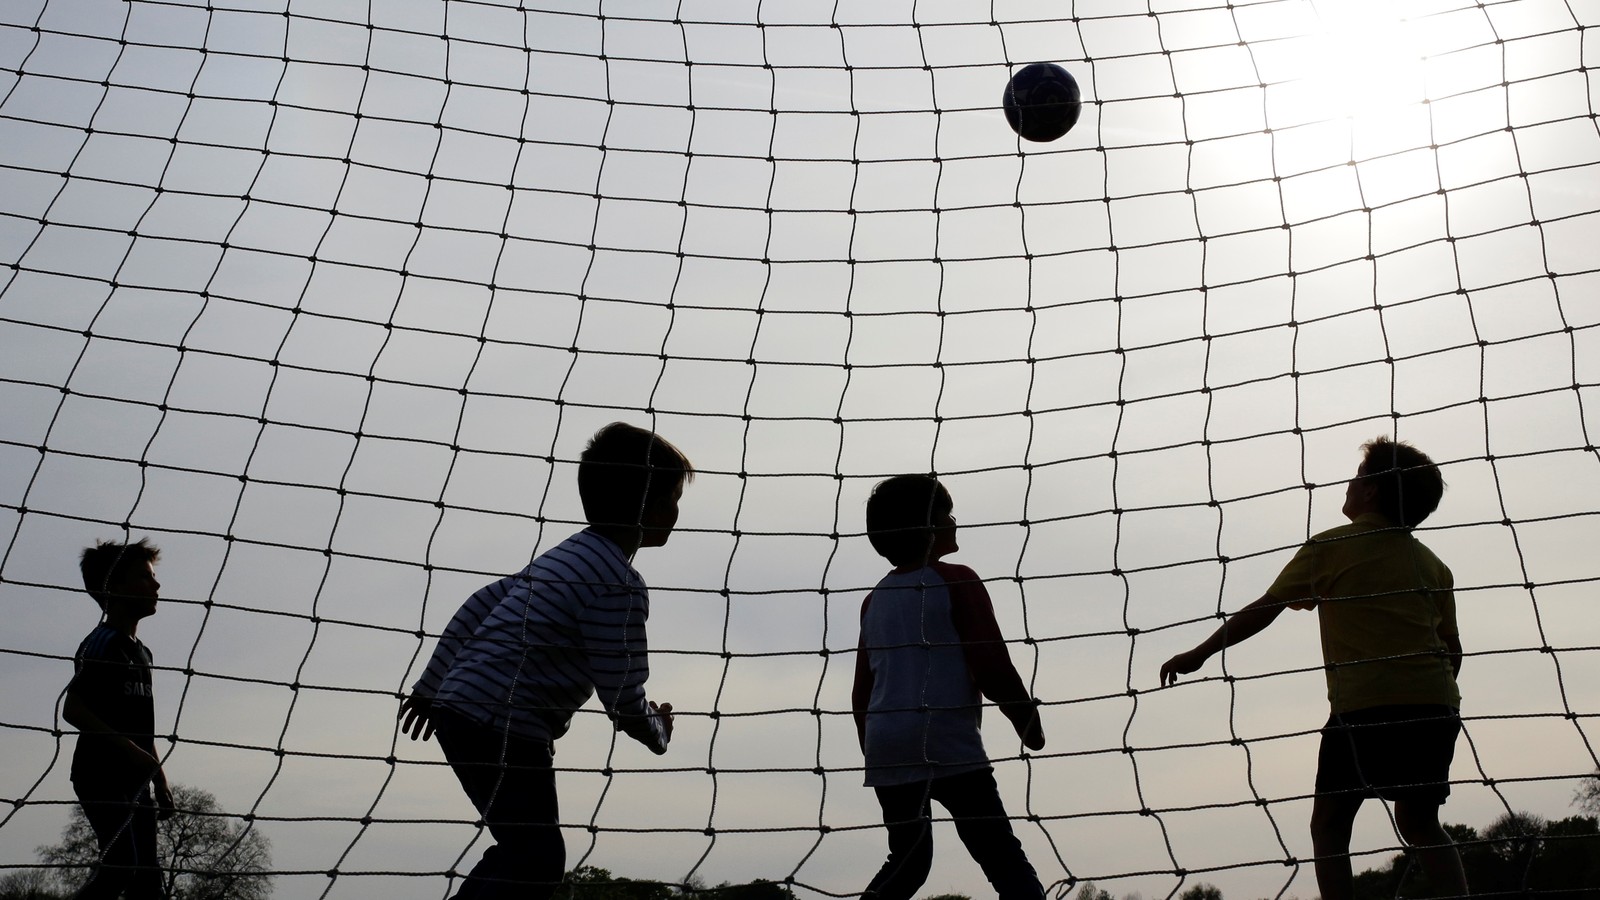 Why Free Play Is Critical for Child Development - Tessa International School